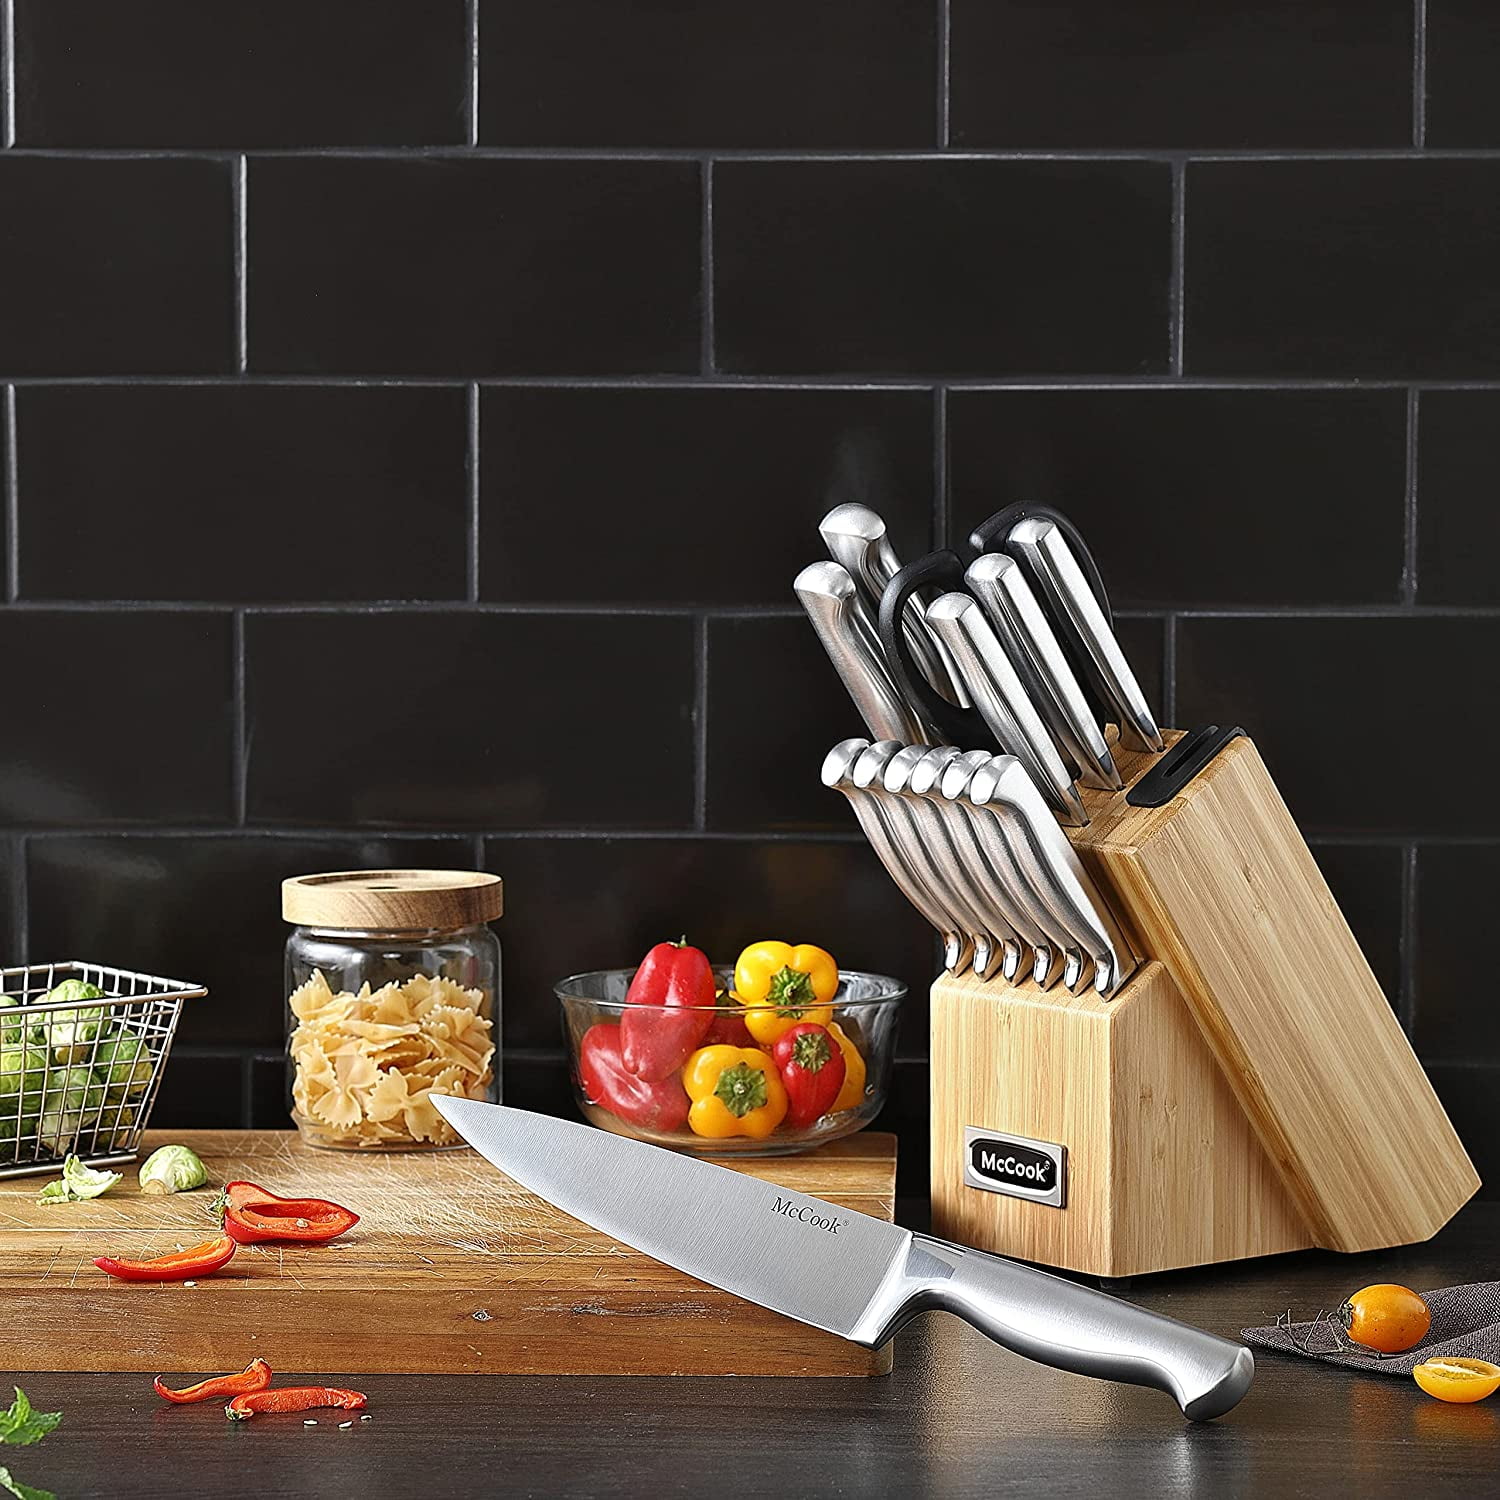 McCook® Kitchen Knife Sets, Golden Titanium Stainless Steel Knives